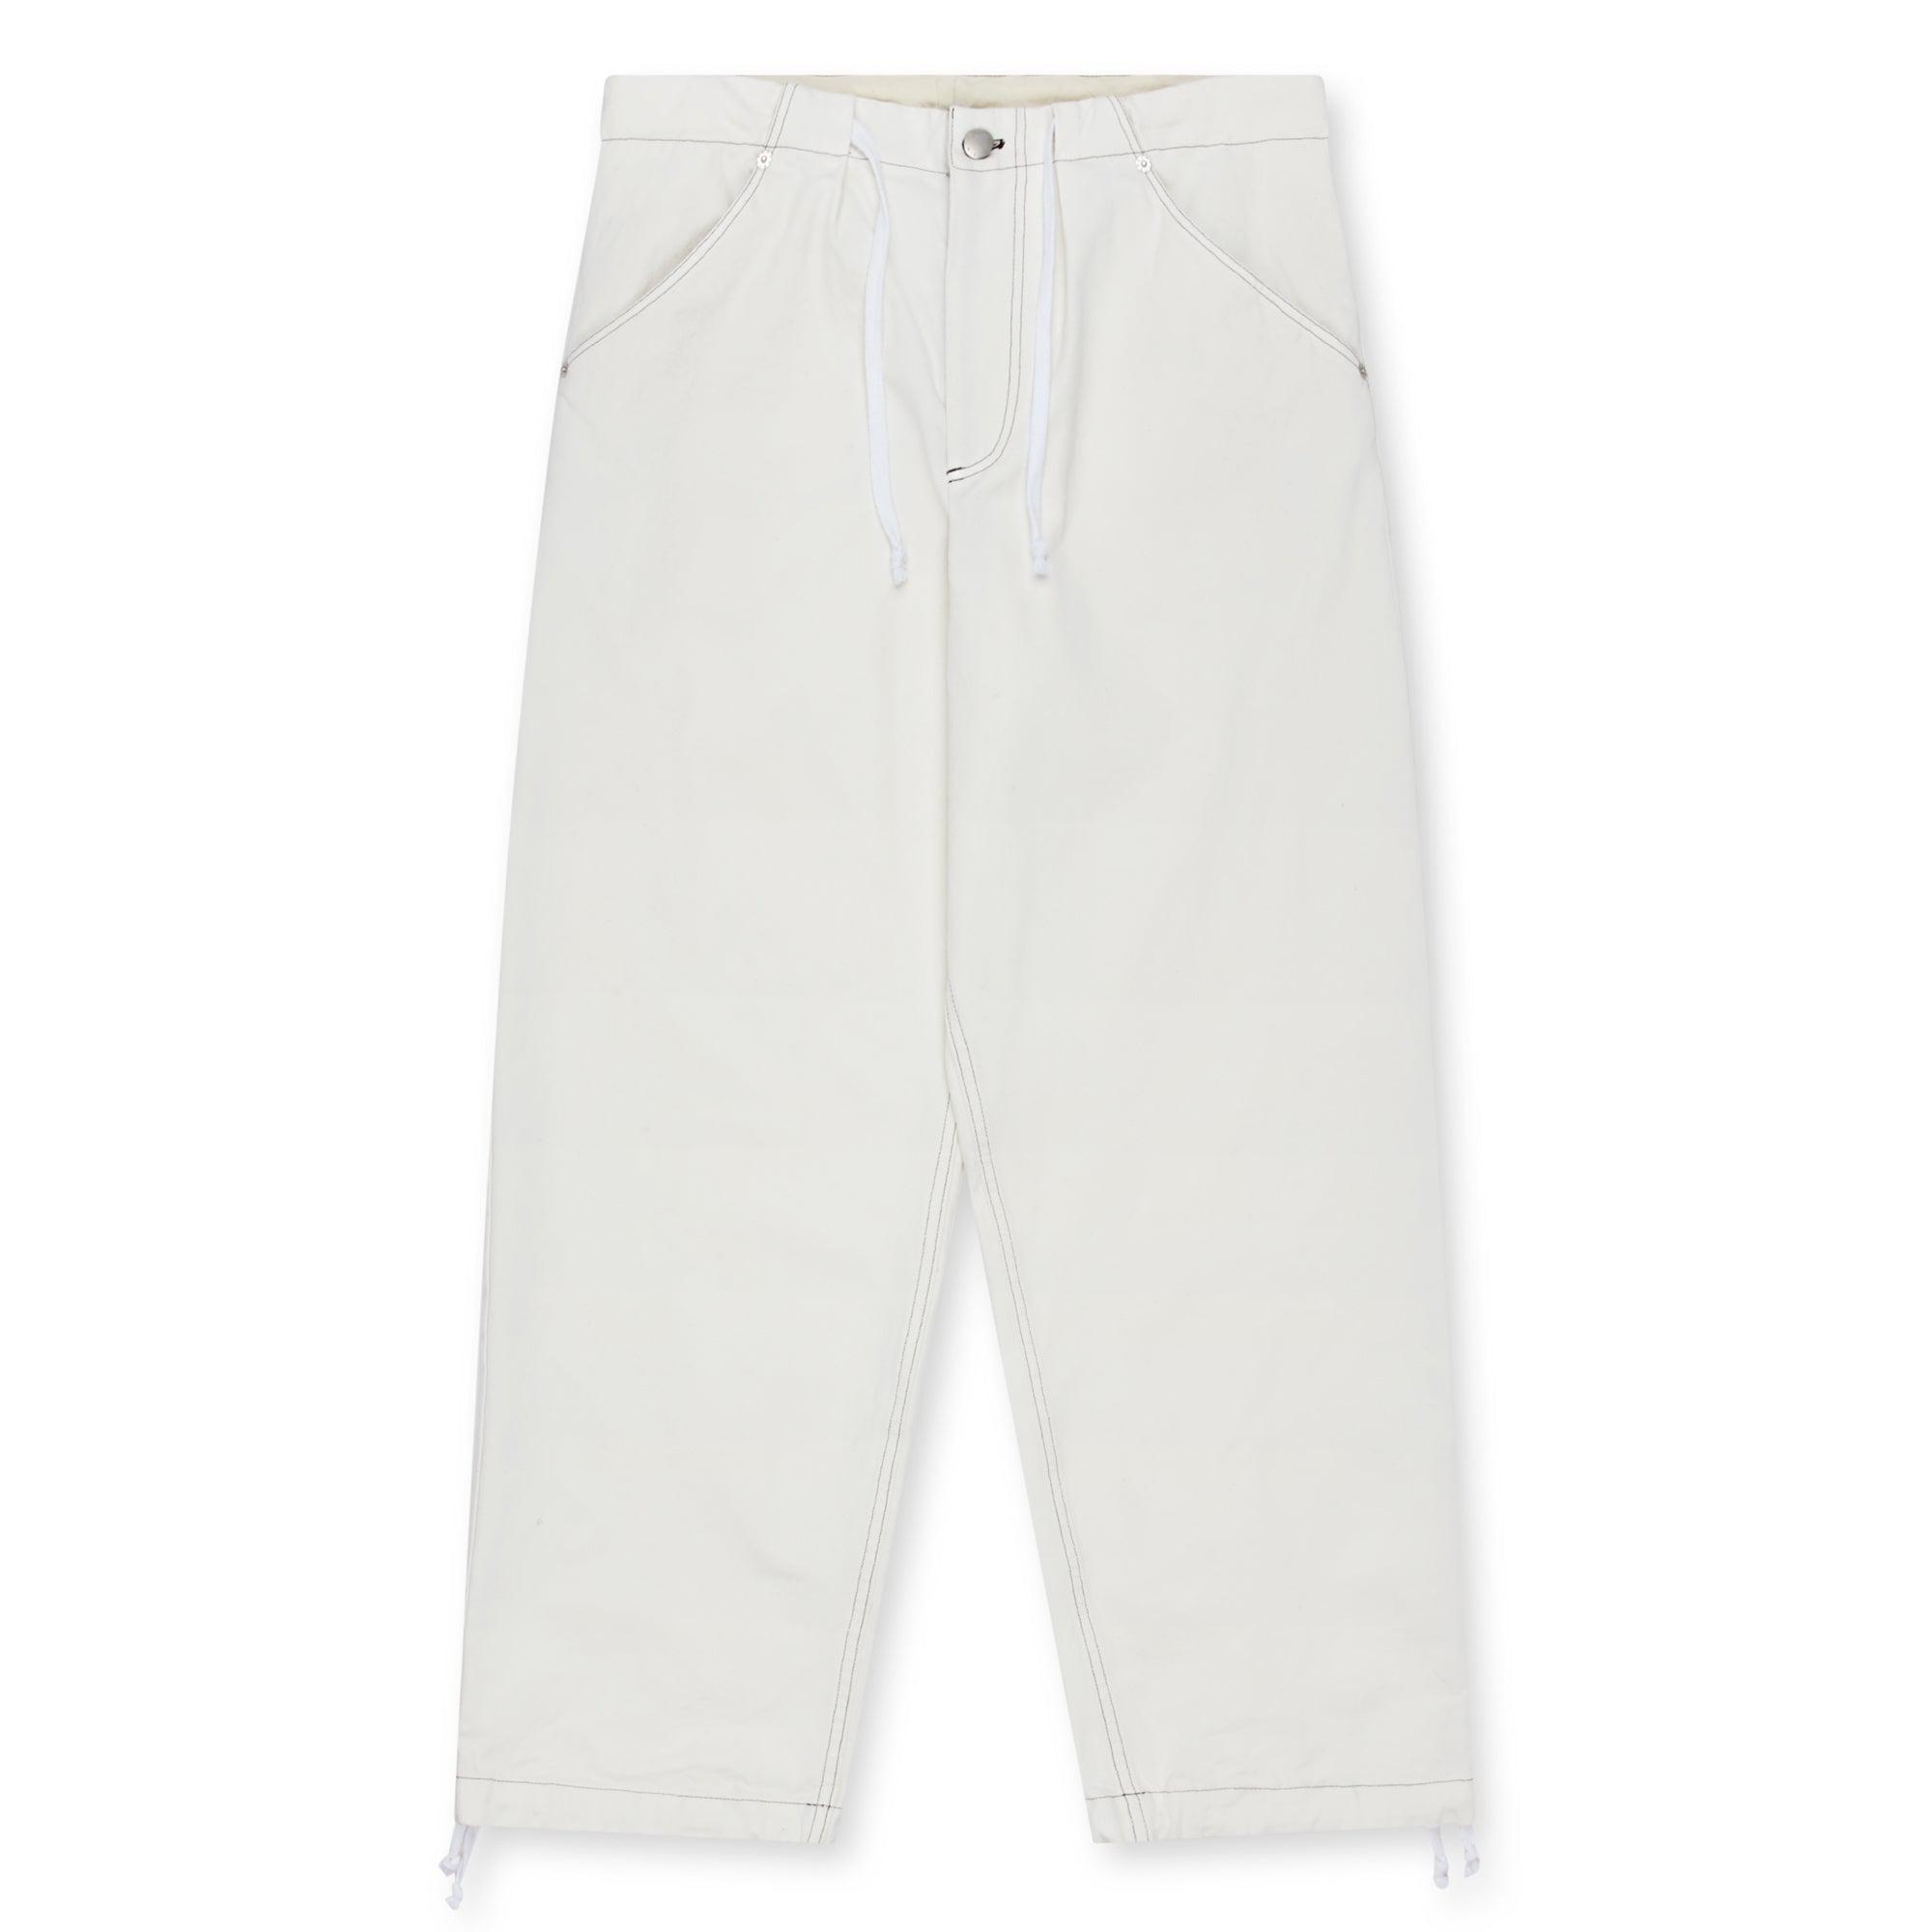 3MAN Men's Workwear Trousers (White) by 3MAN